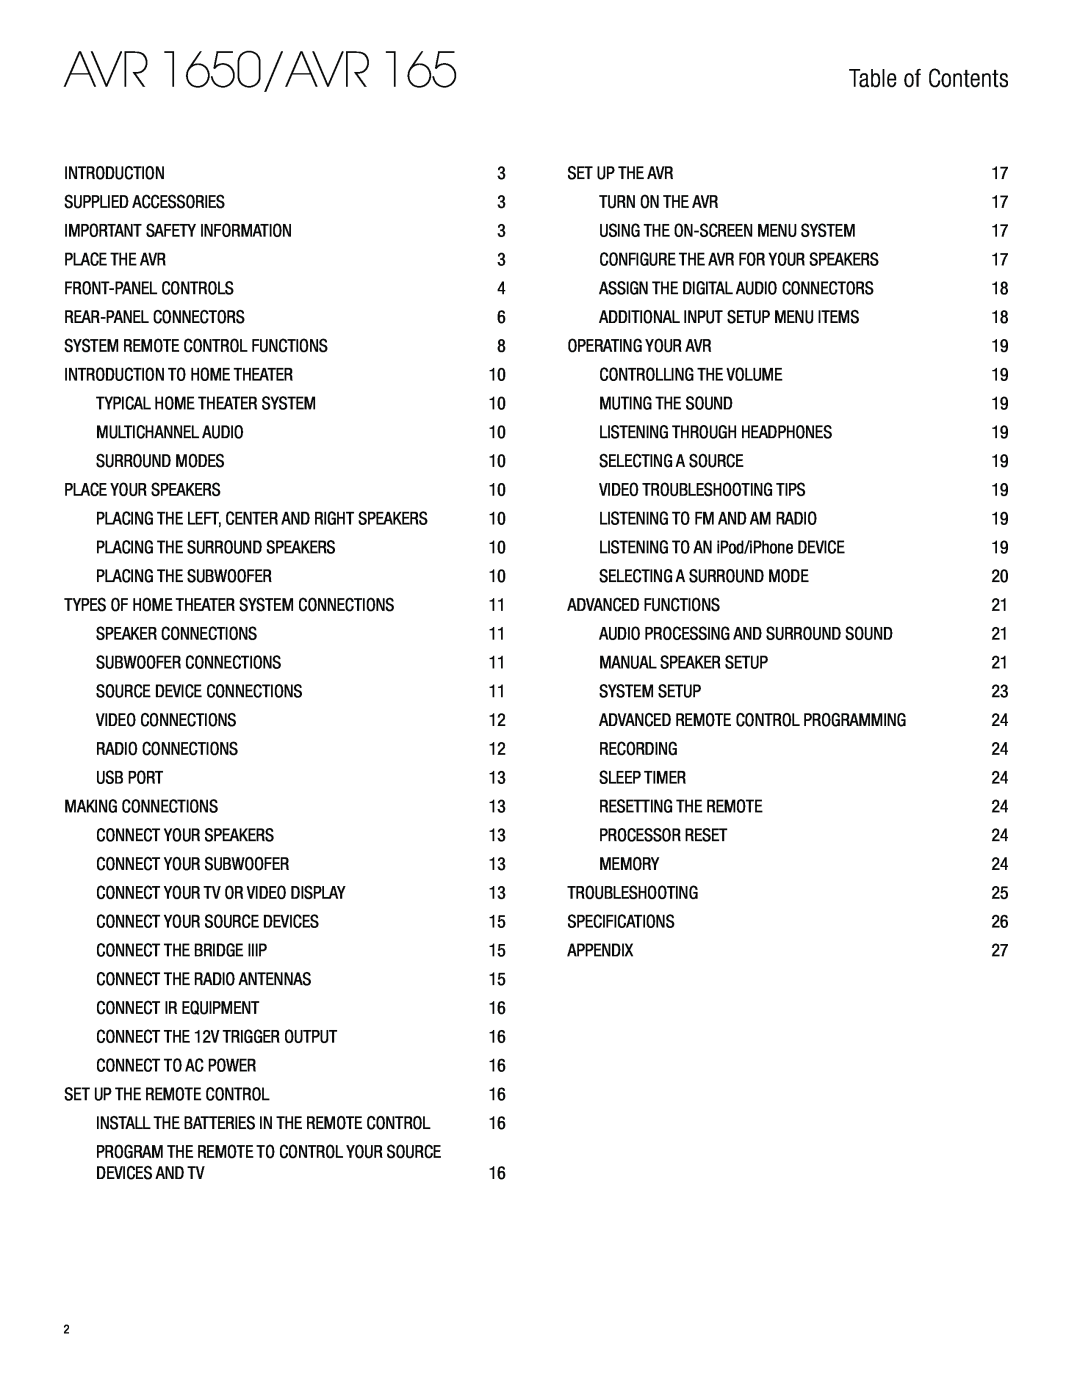 Harman-Kardon owner manual Table of Contents, AVR 1650/AVR 